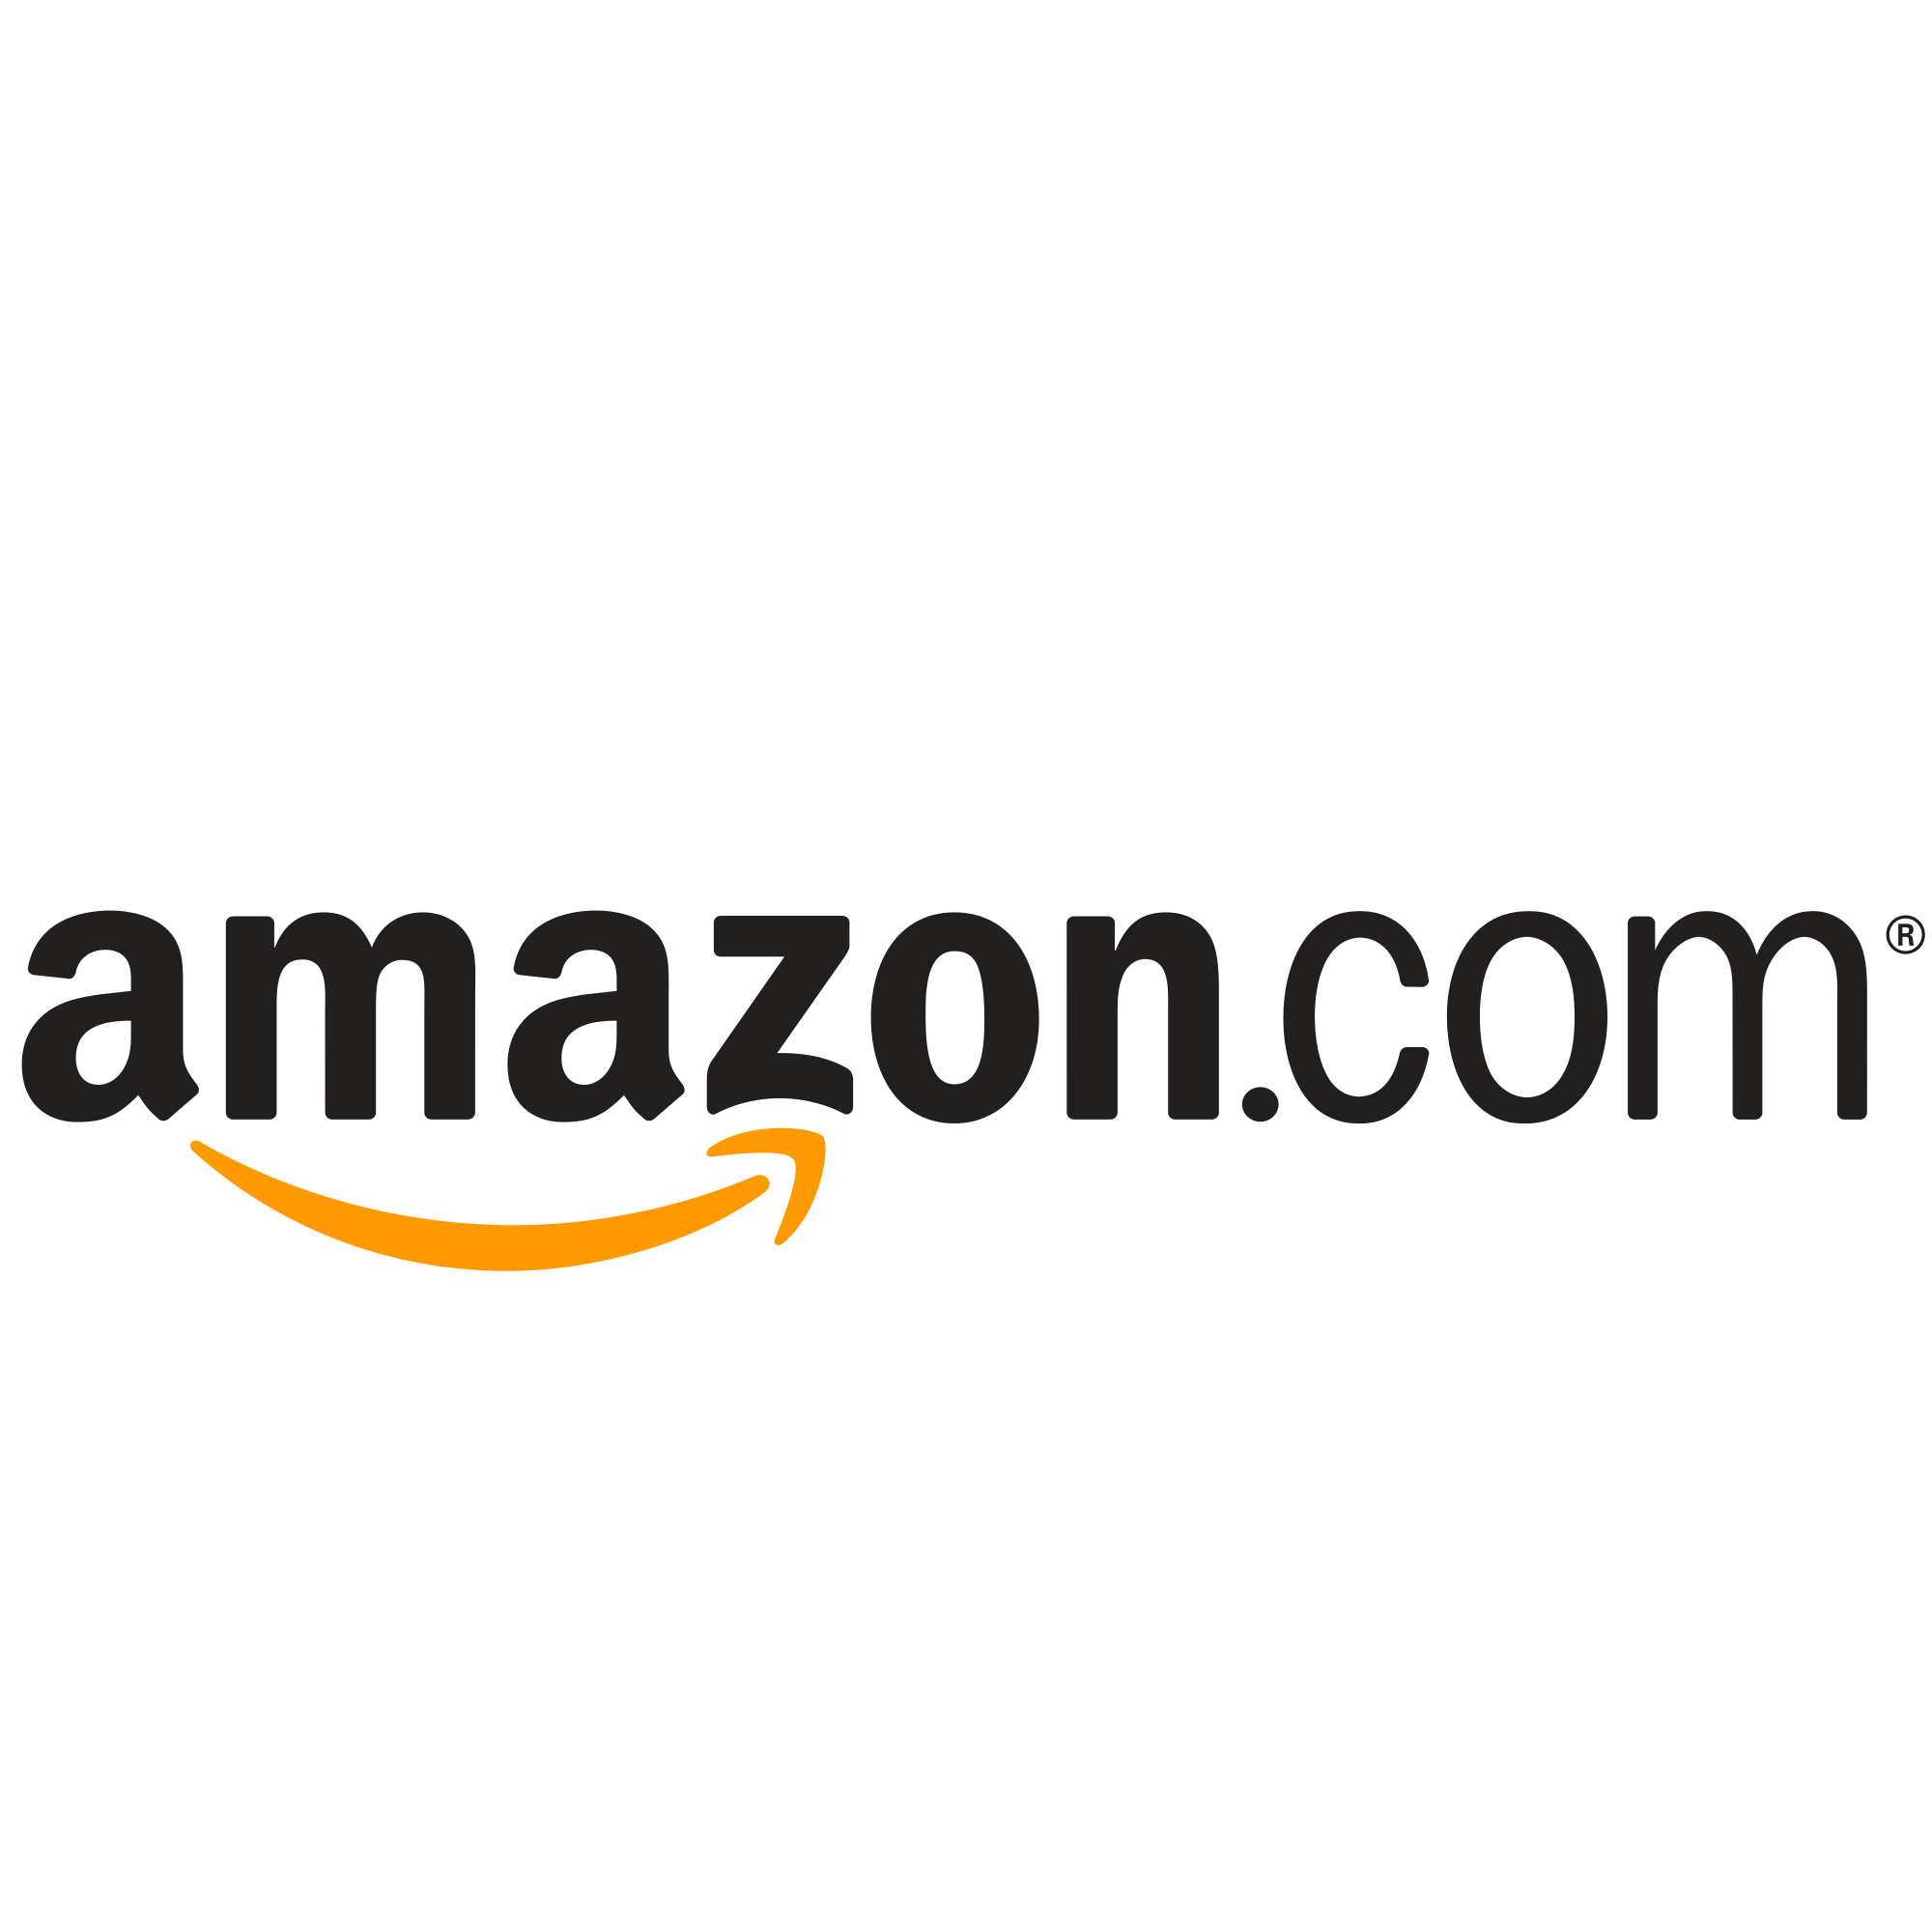 Amazon Smile Logo - Amazon.com LOGO. Building Successful Online Business